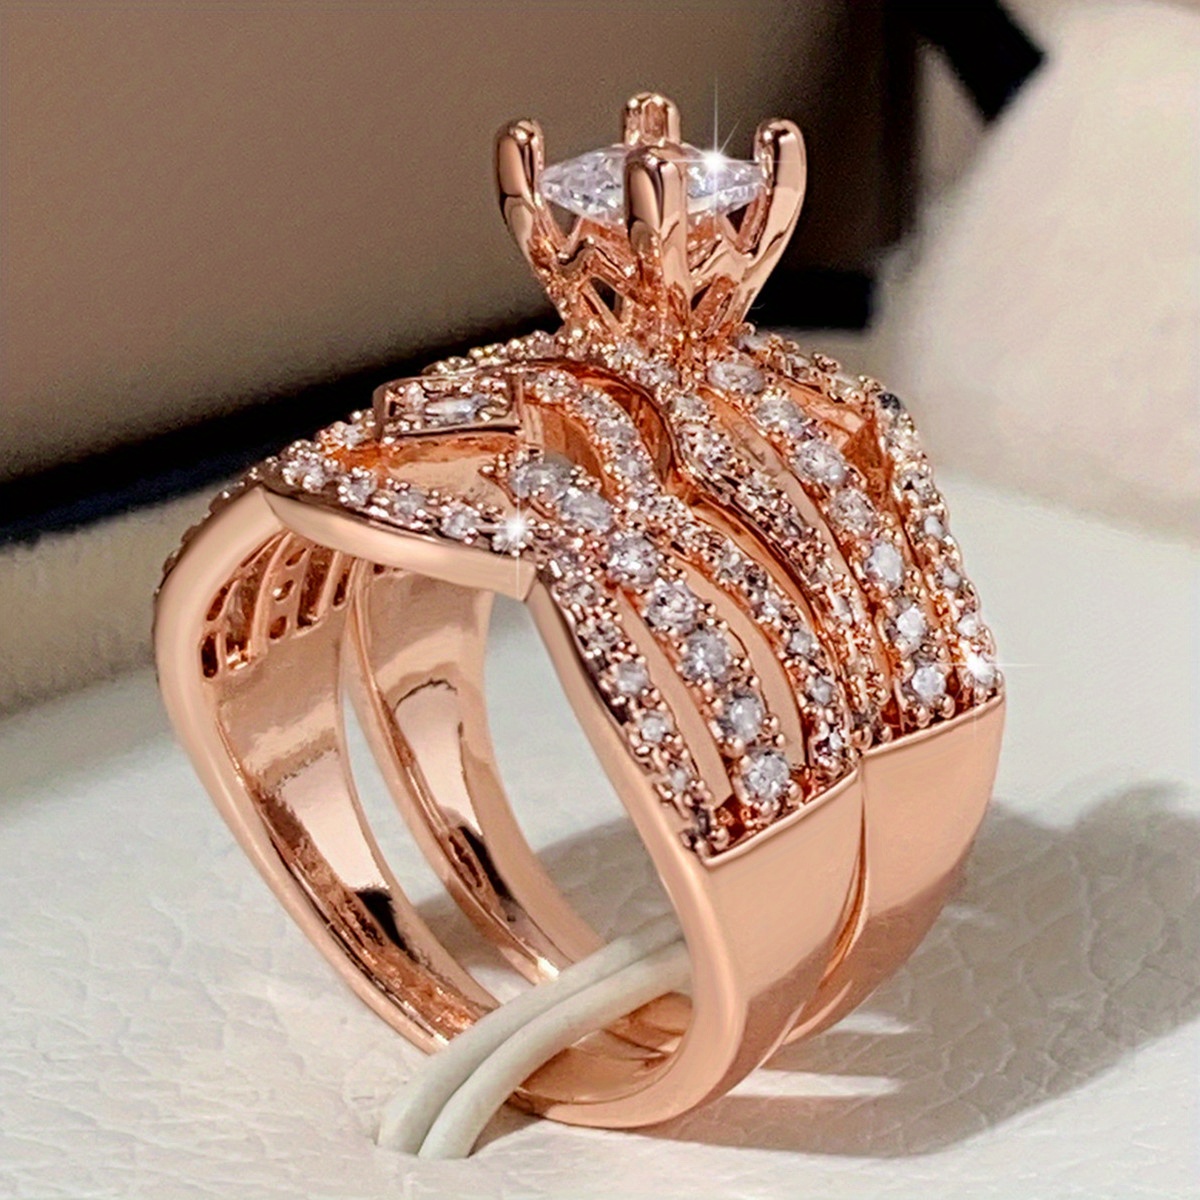 Women's Micro-Inlaid Square Diamond Ring Set